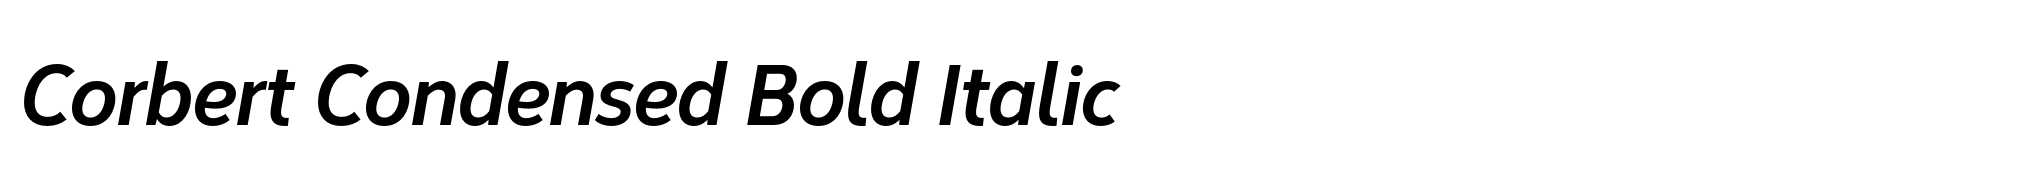 Corbert Condensed Bold Italic image